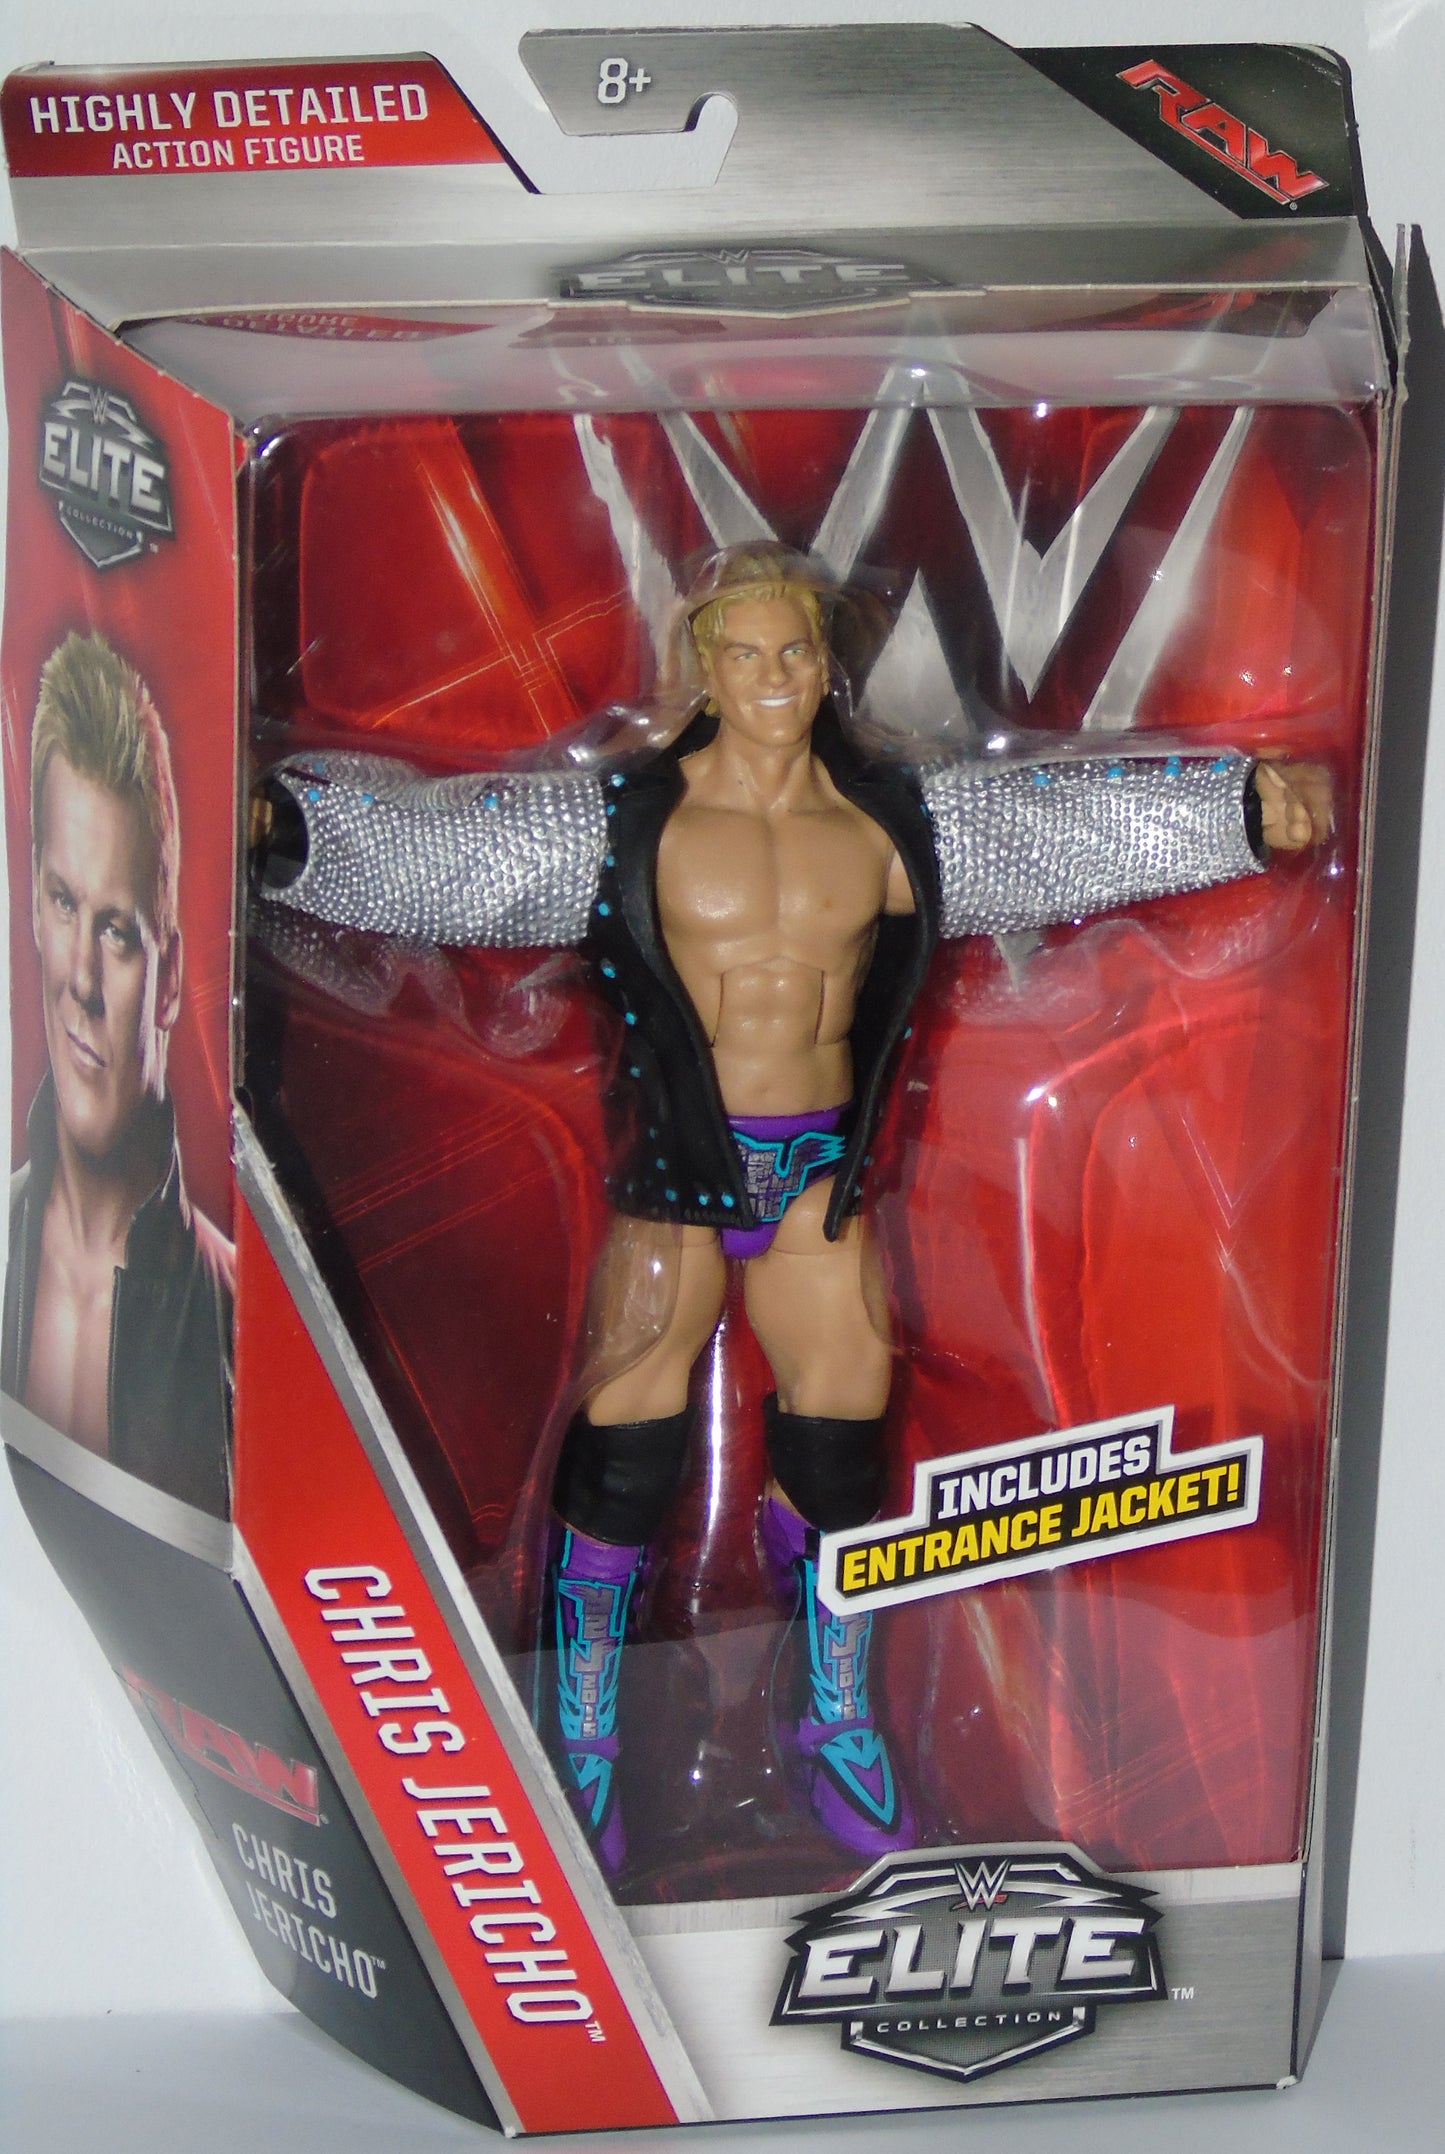 Chris Jericho WWE Mattel Elite Figure